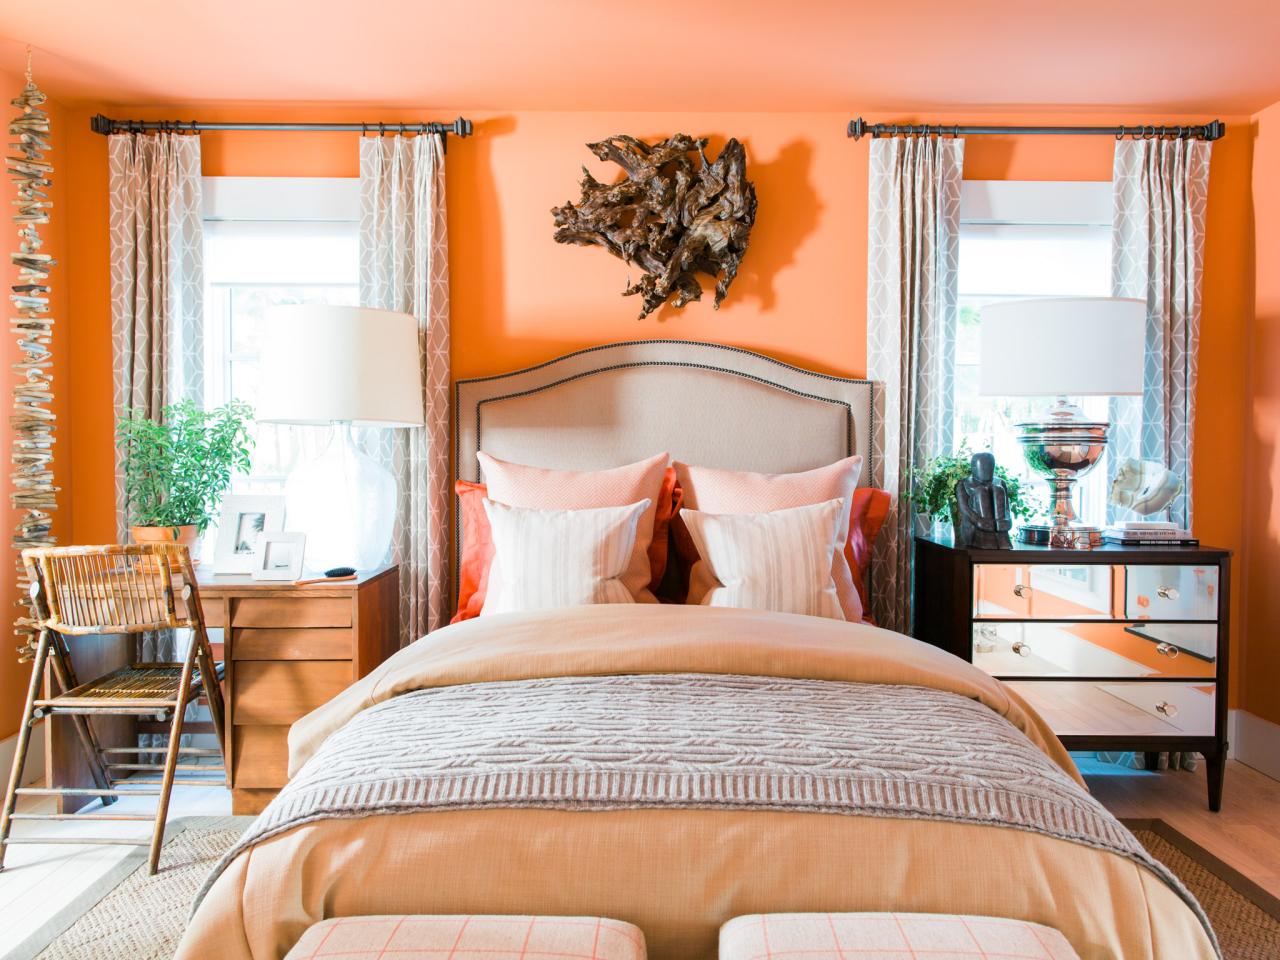 How to Design a Happy Bedroom | HGTV's Decorating & Design ...